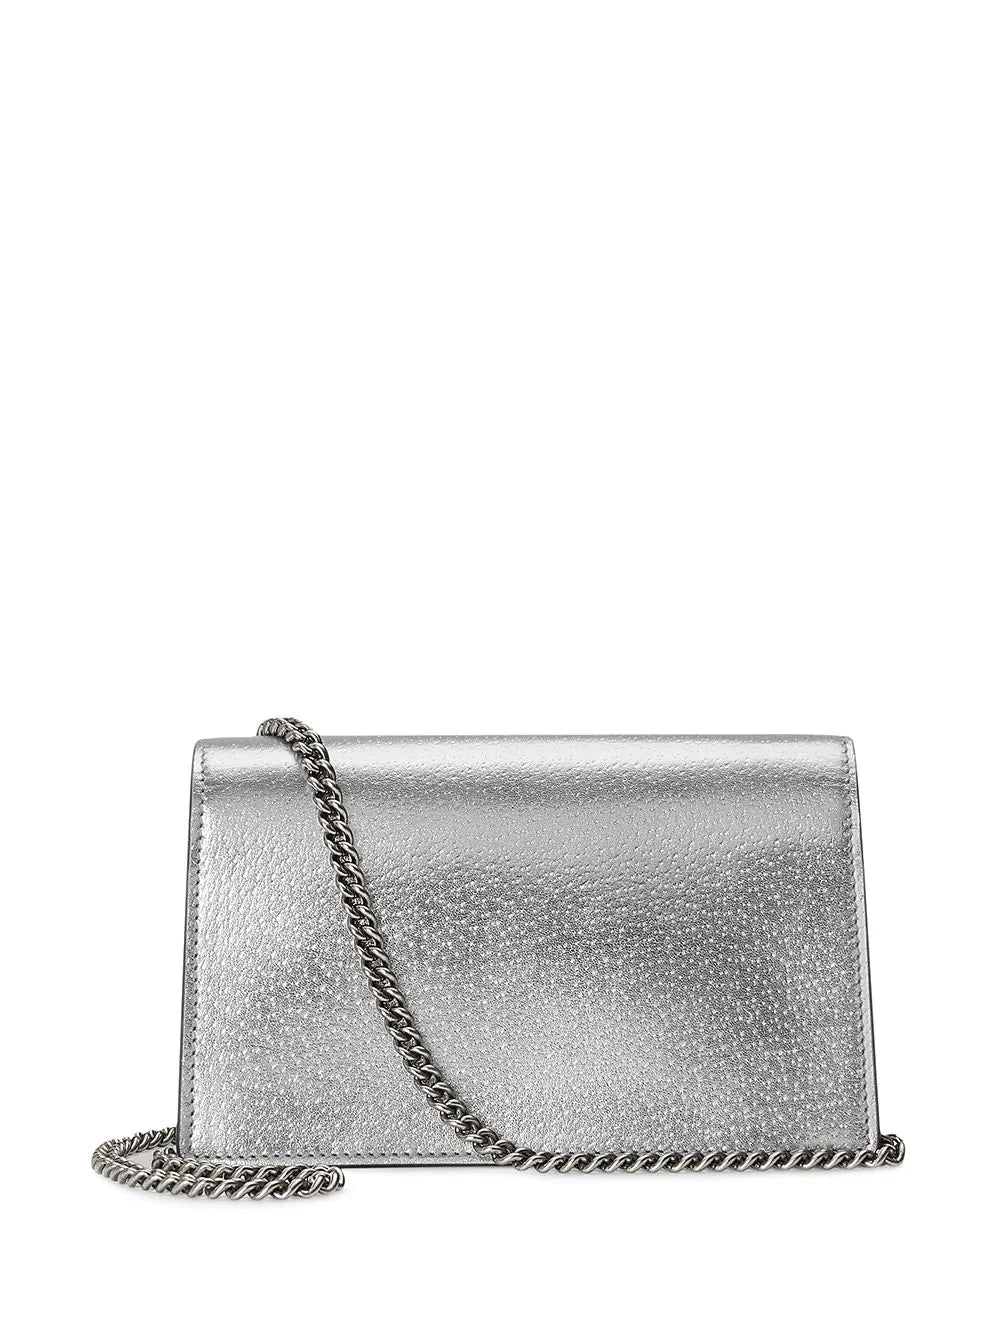 Dionysus Super Mini Bag - Silver Lame Leather